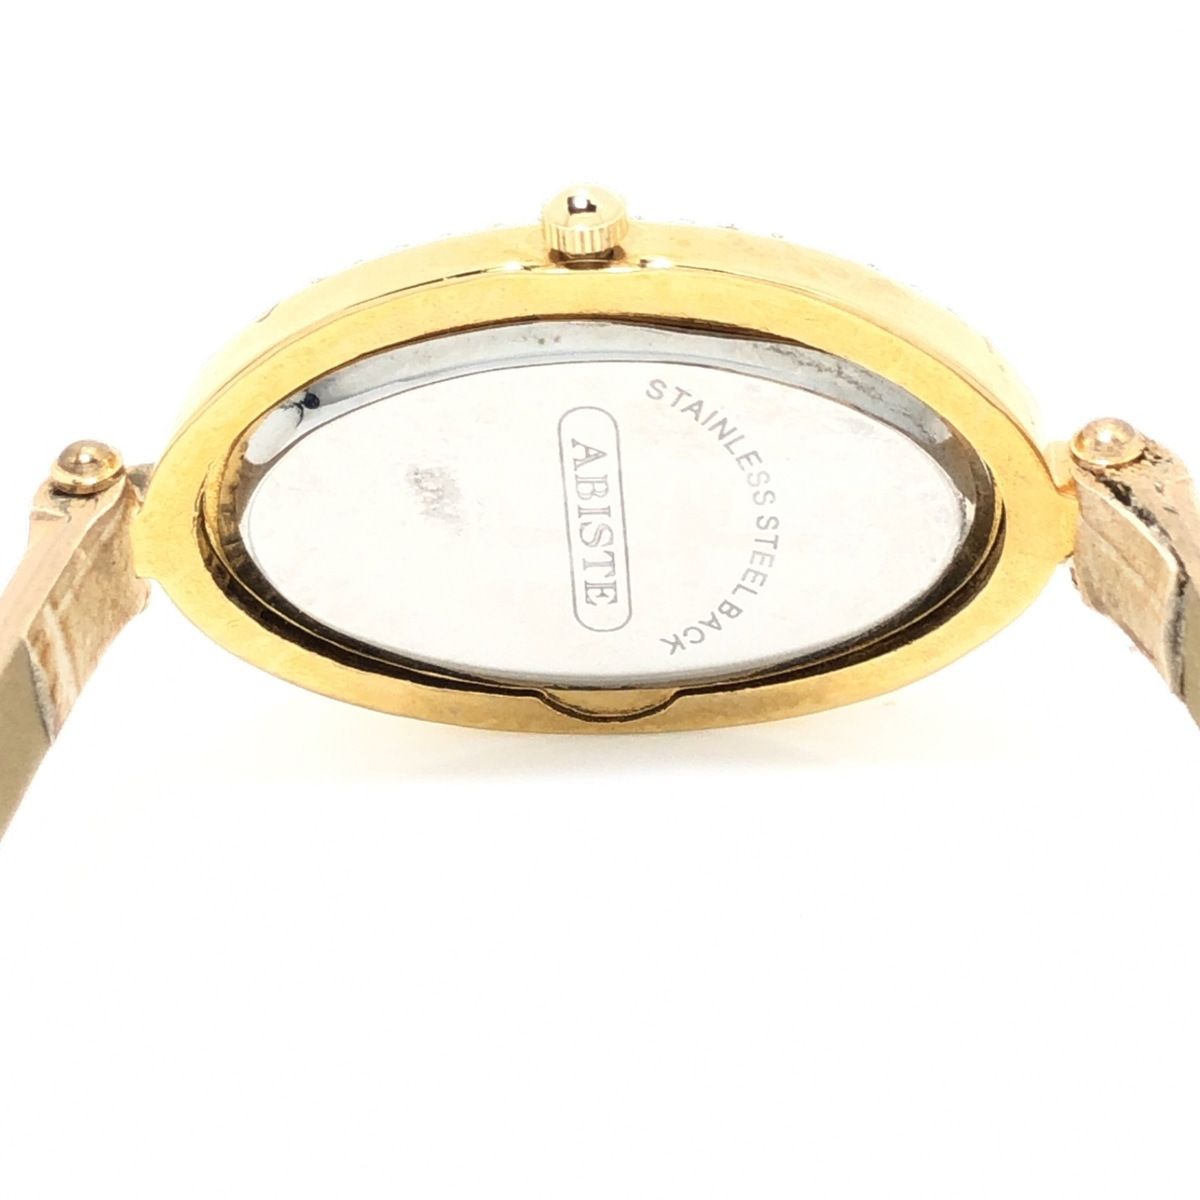 ABISTE(アビステ) 腕時計 - レディース 型押し加工/ラインストーンベゼル ホワイトシェル - メルカリ